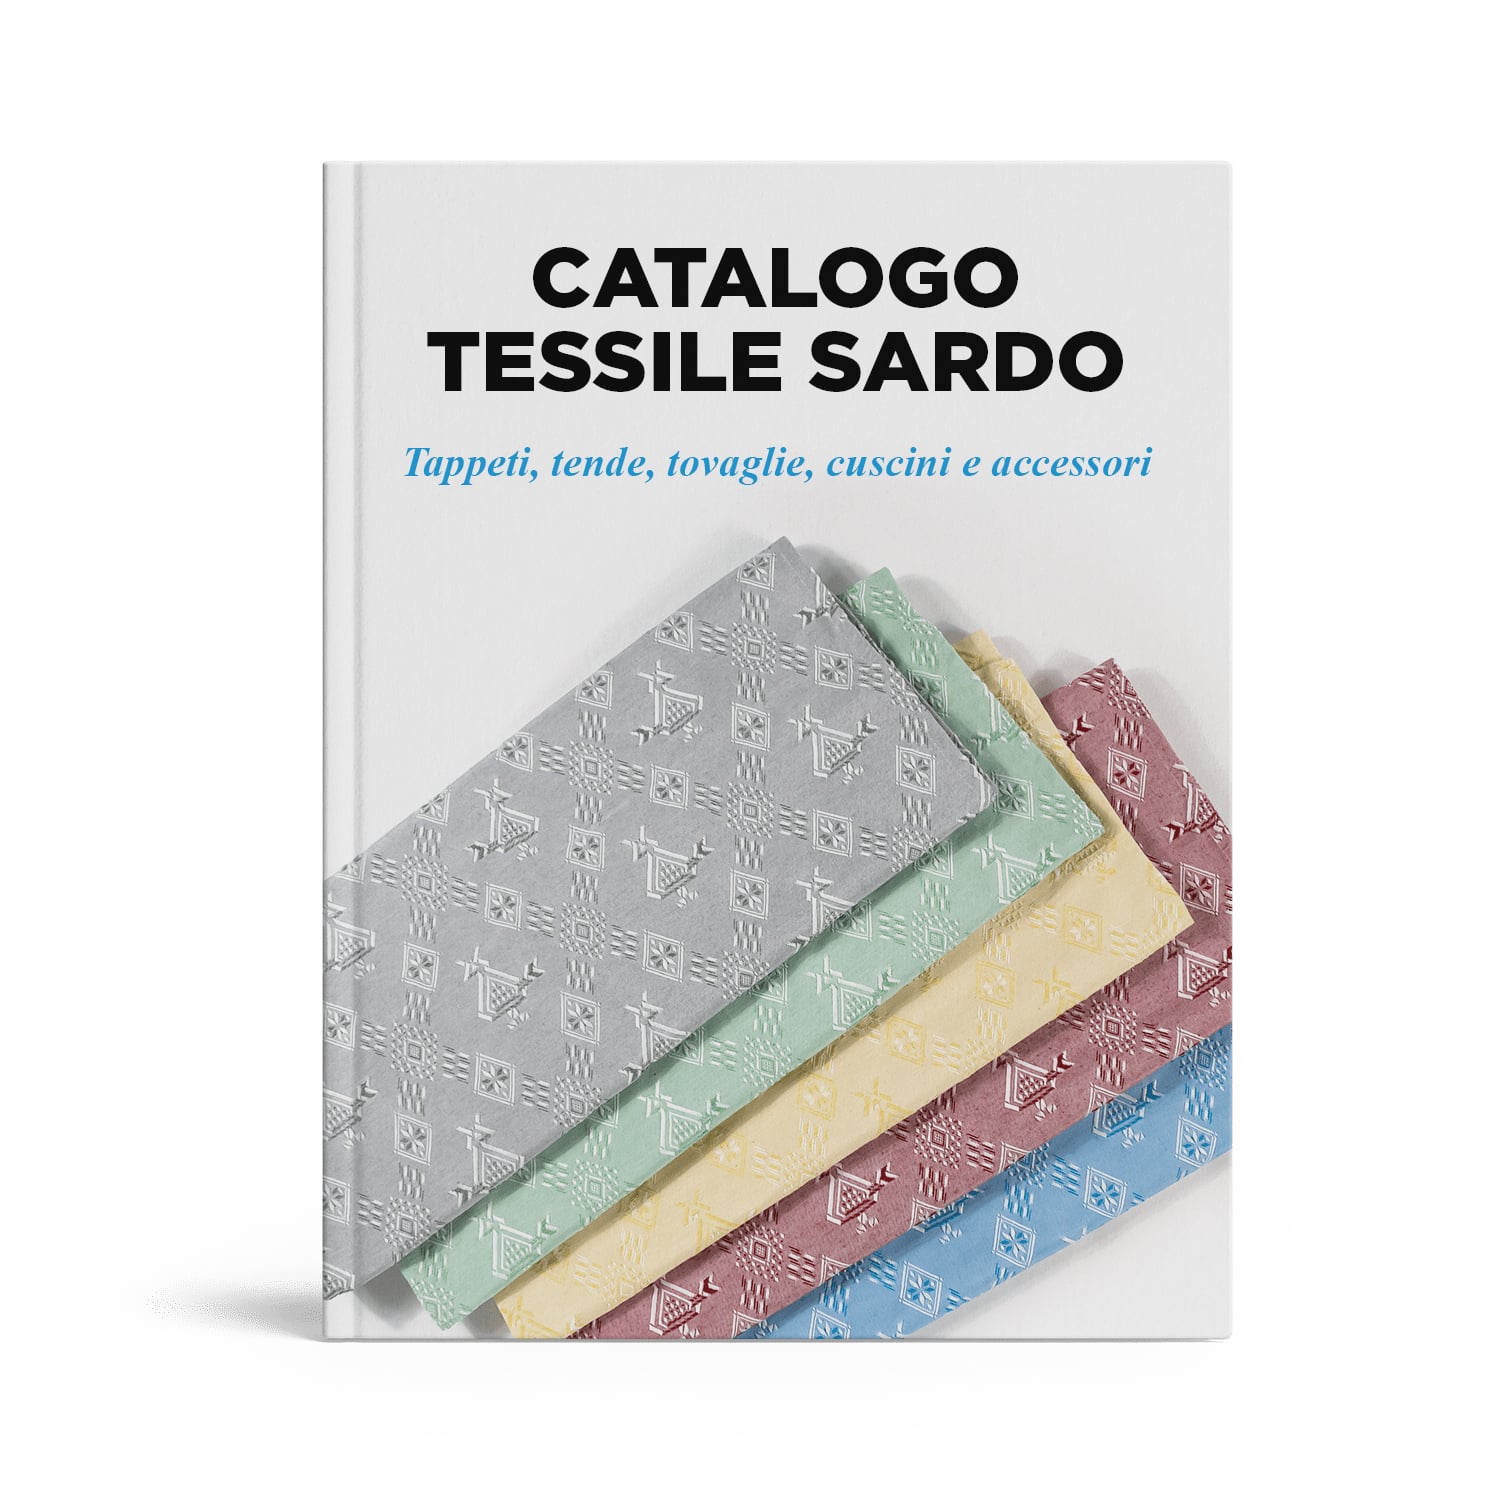 Catalogo Tessile Sardo - Batik srl